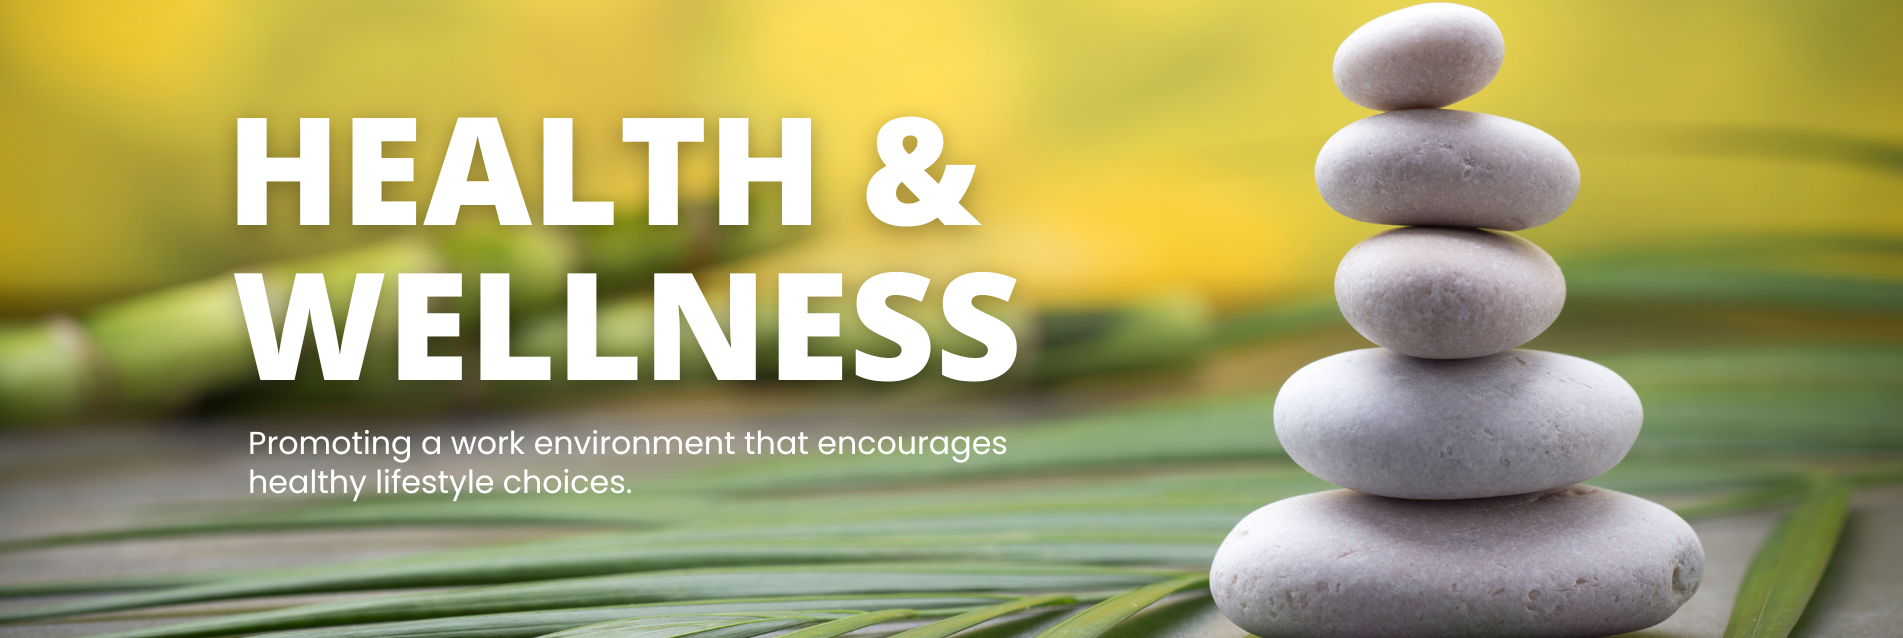 health and wellness meditation stones